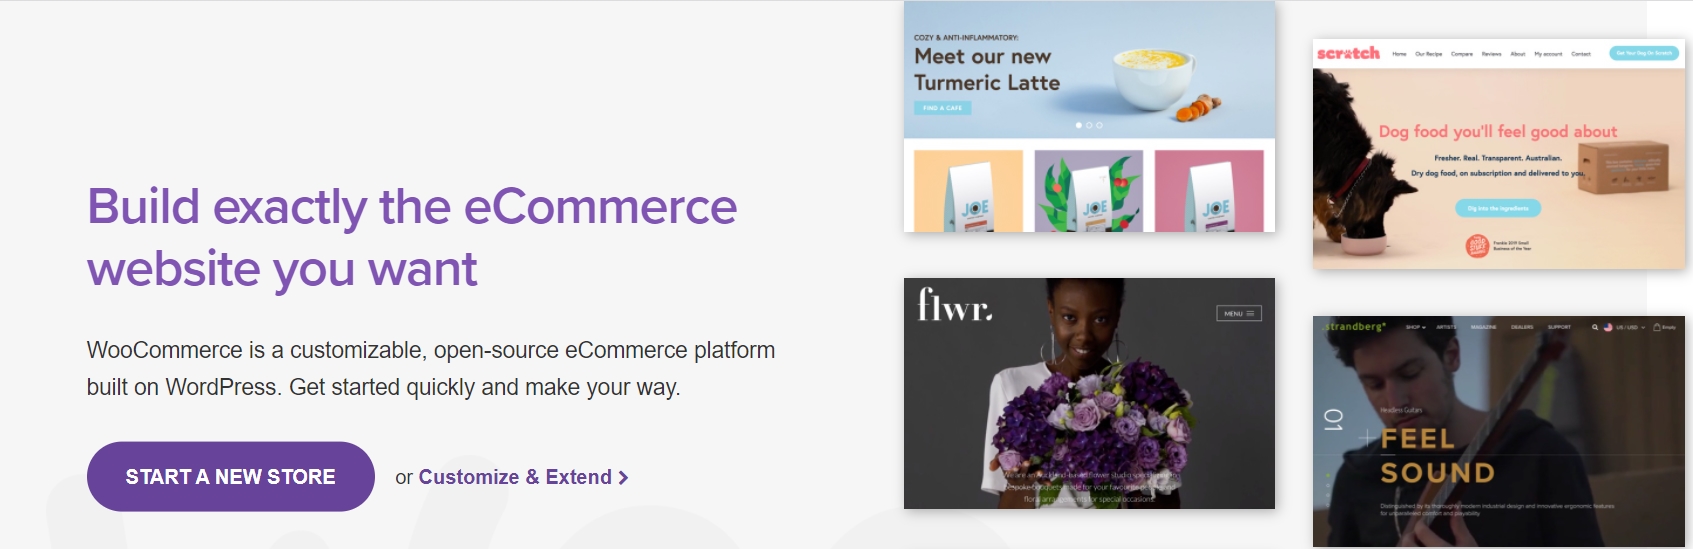 Woocommerce: E-Commerce Platform For Wordpress